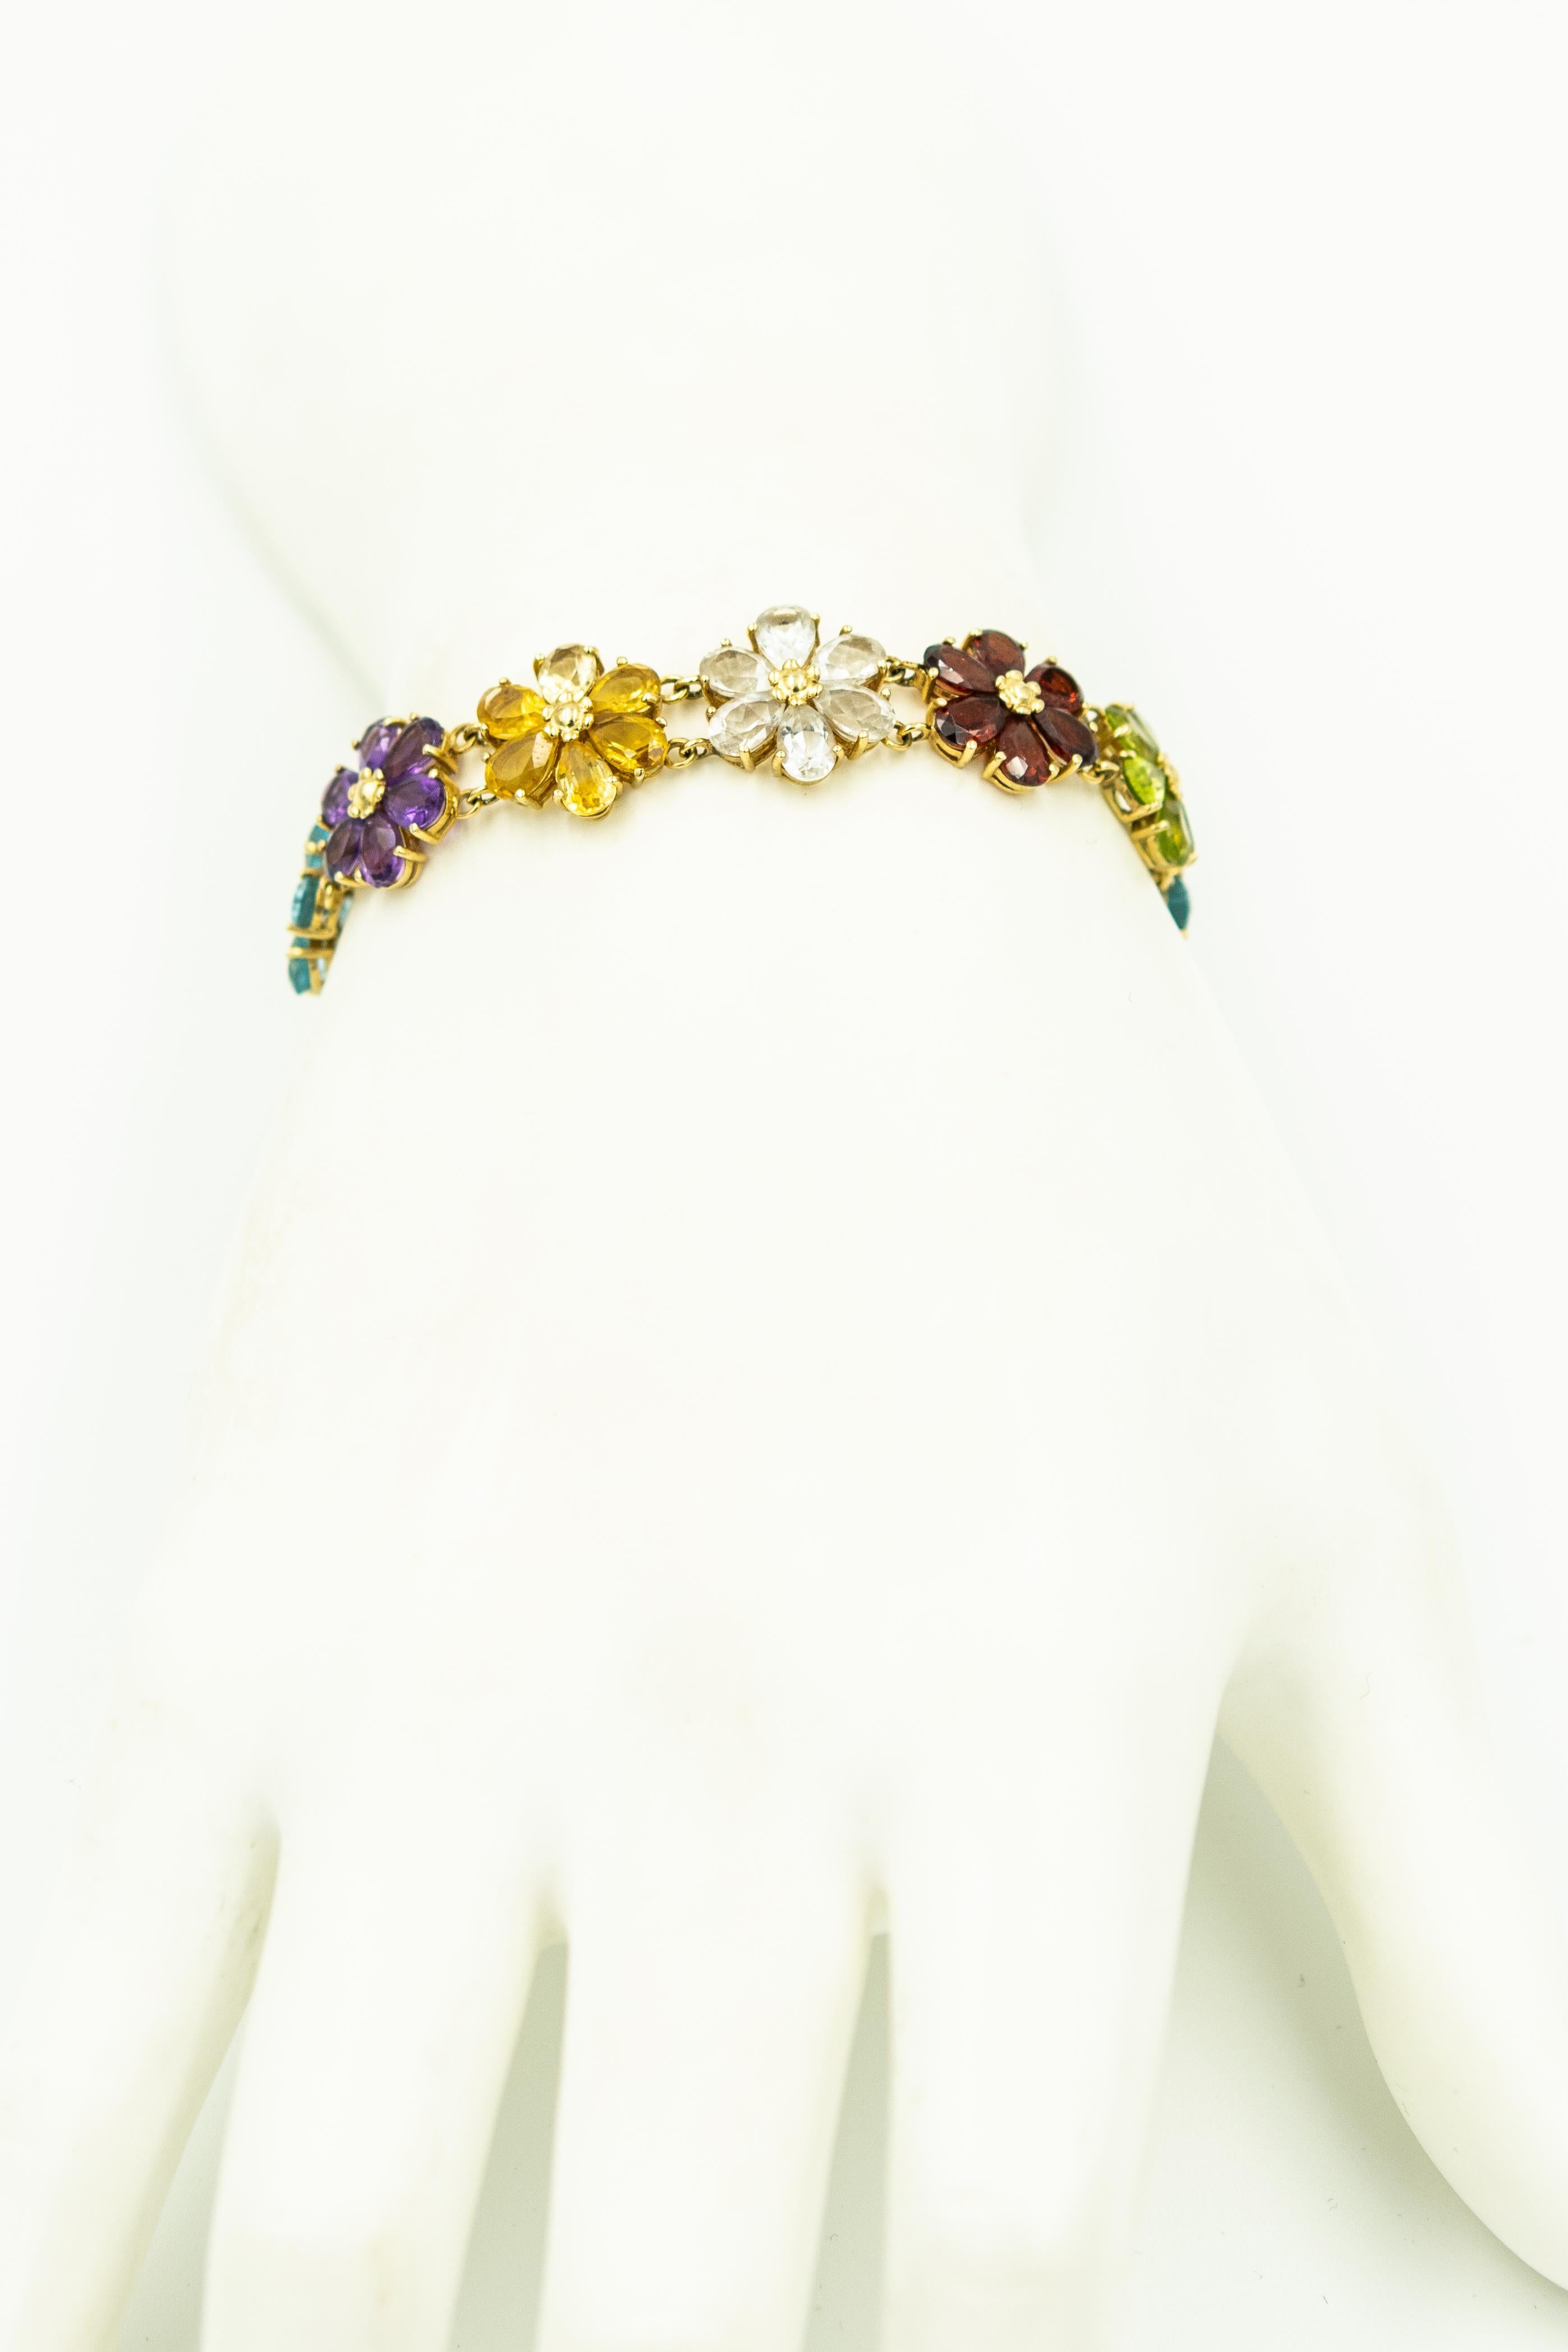 1970s Semi Precious Gemstone Gold Flower Bracelet Earrings Ring and Pendant Set 12